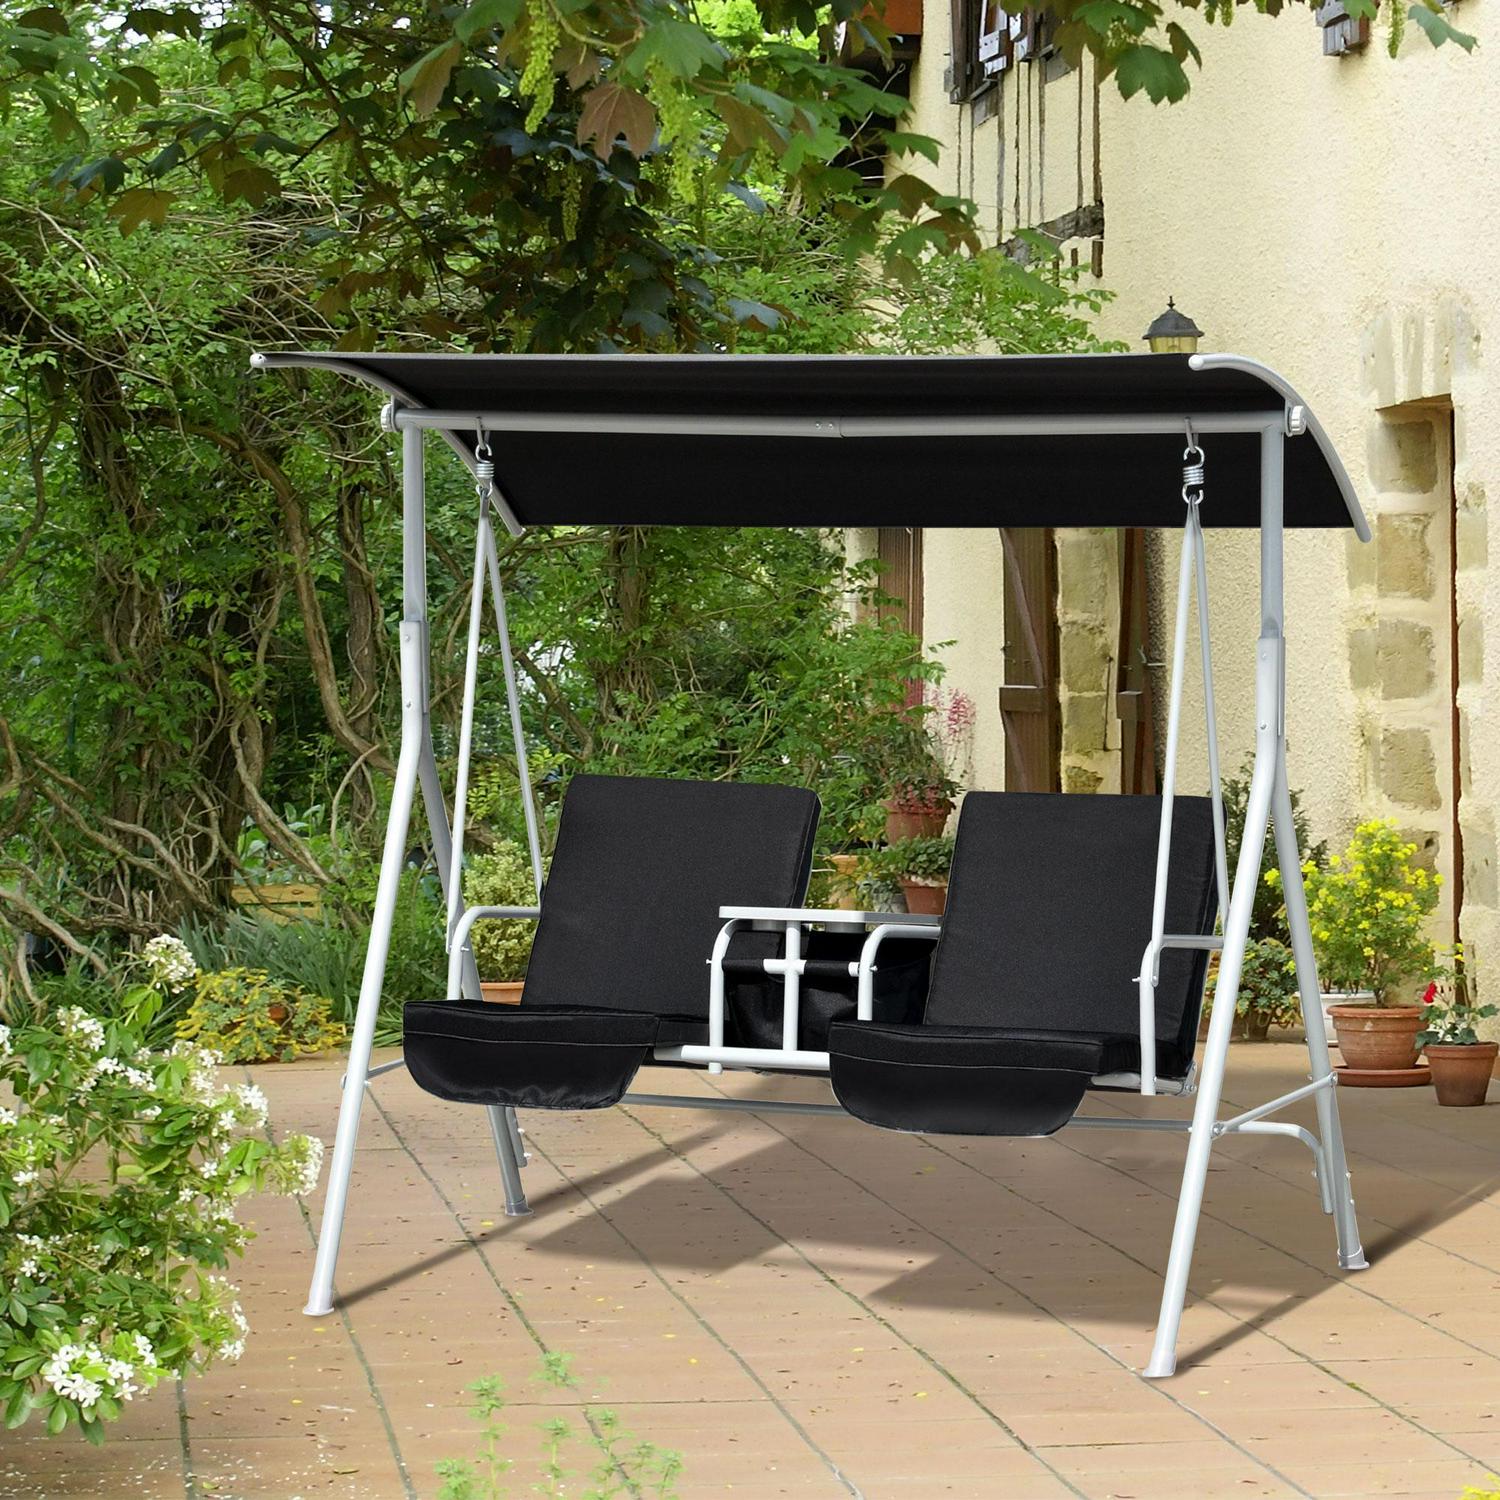 2 Seater Garden Swing Chair Patio Rocking Bench- Black